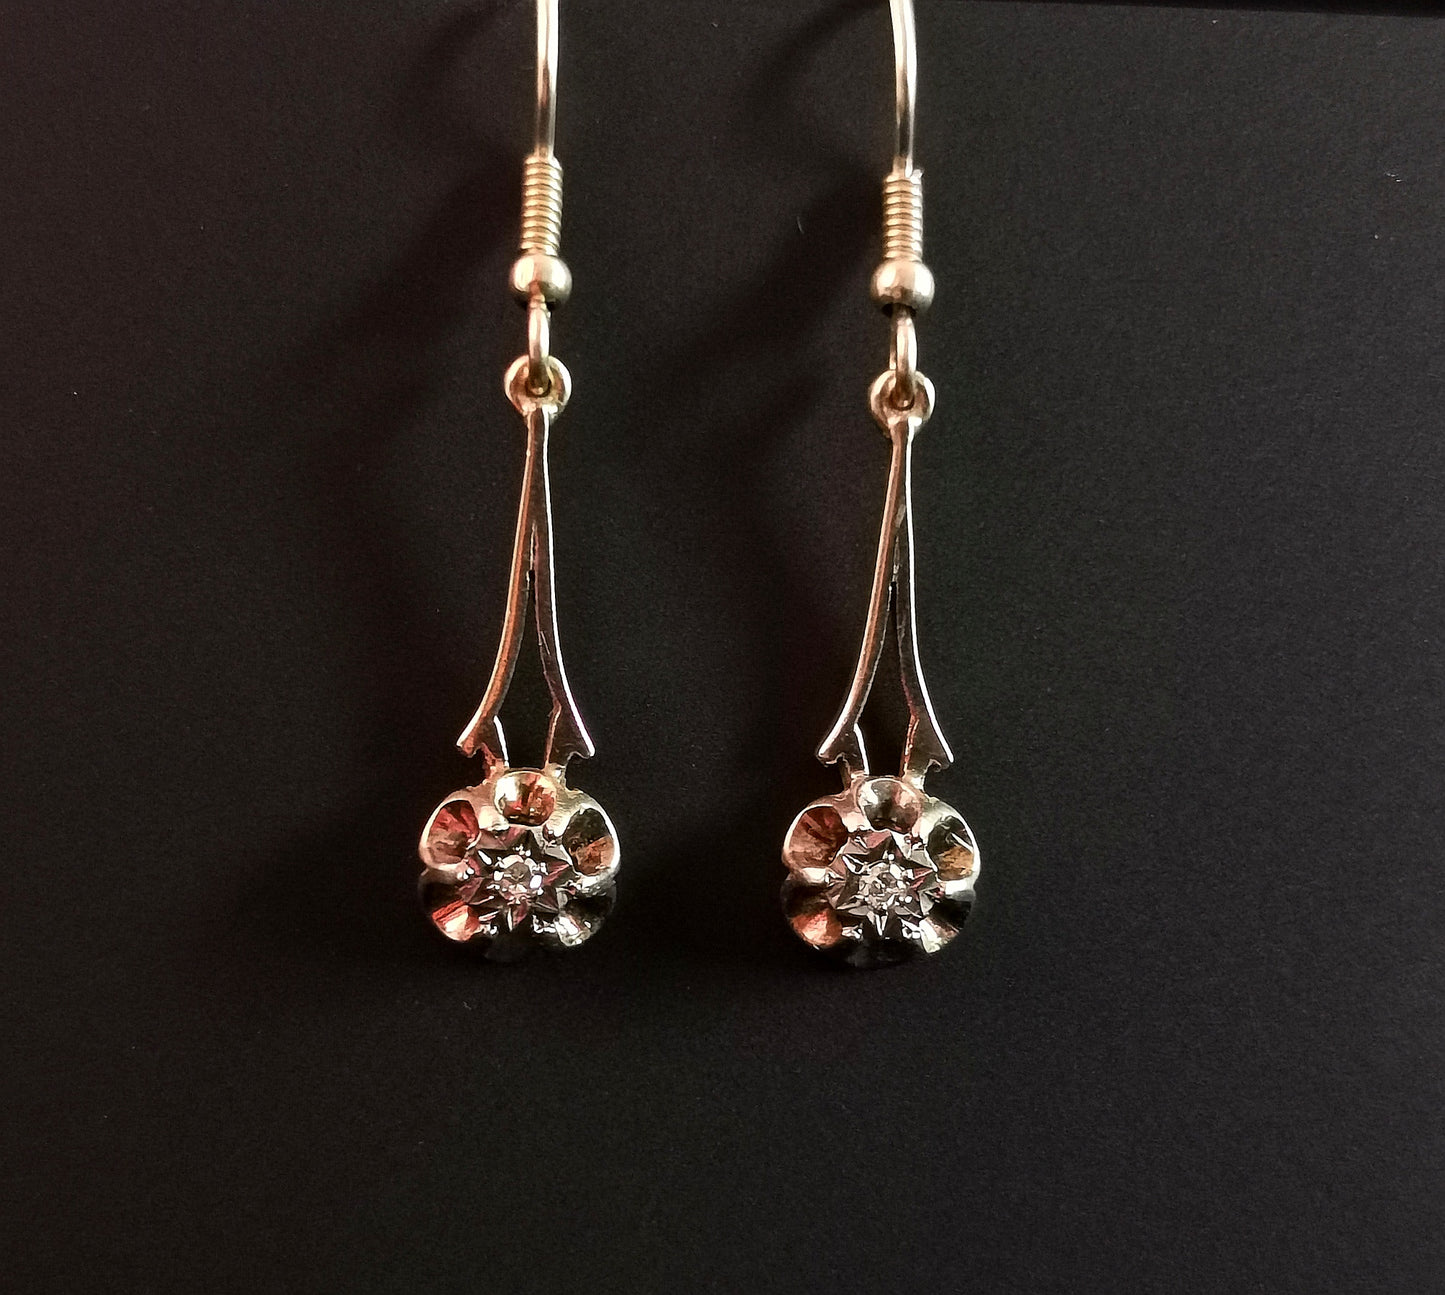 Antique Diamond drop earrings, 9ct gold, Edwardian